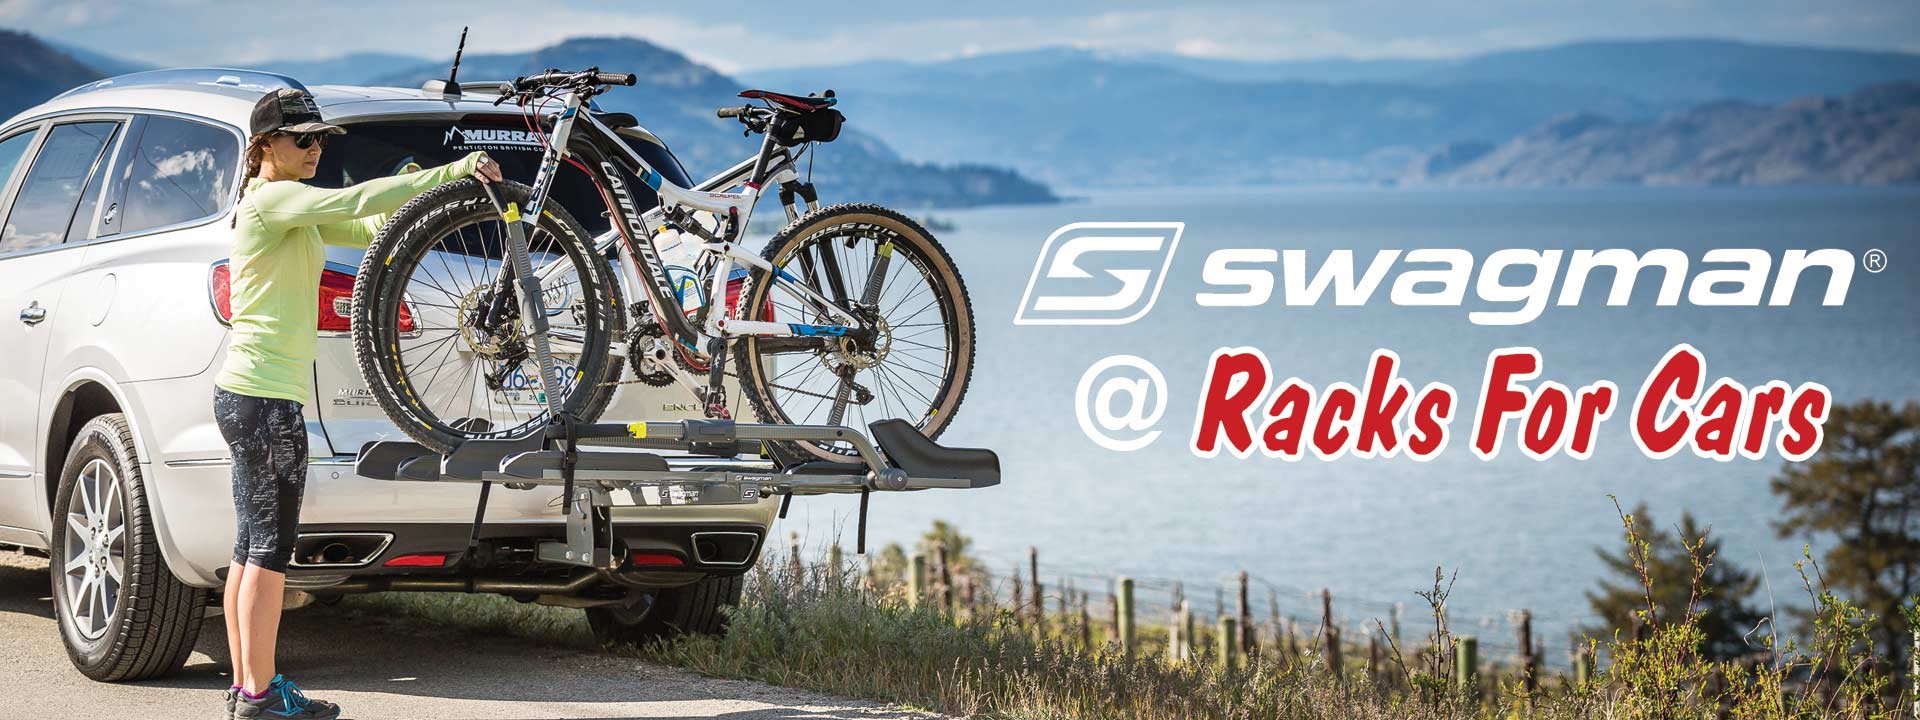 swagman trailer hitch bike rack